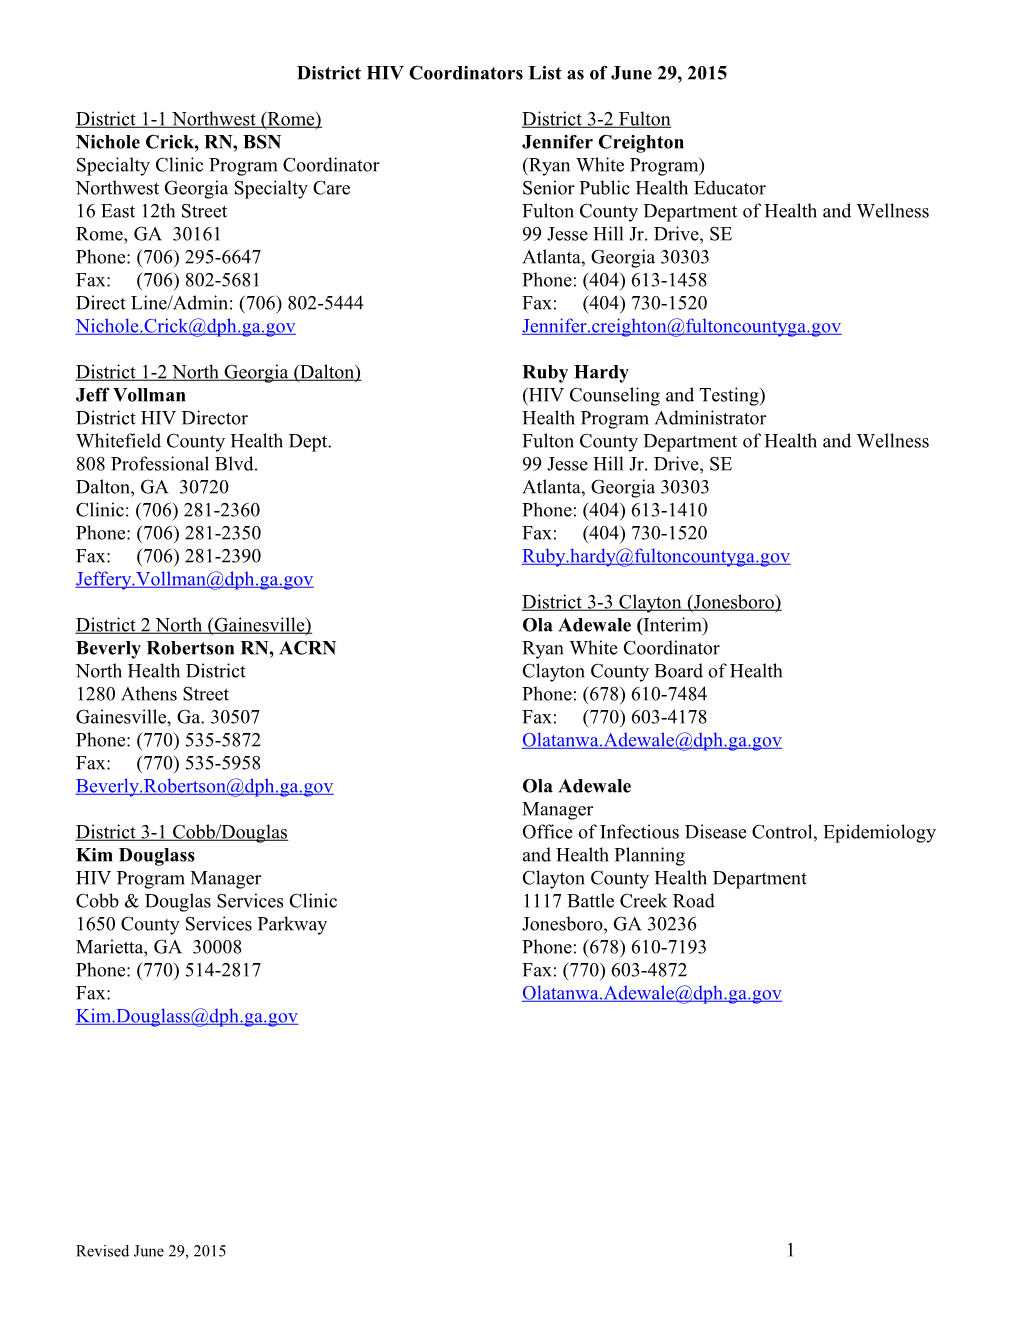 District HIV Coordinators List As of June 29, 2015